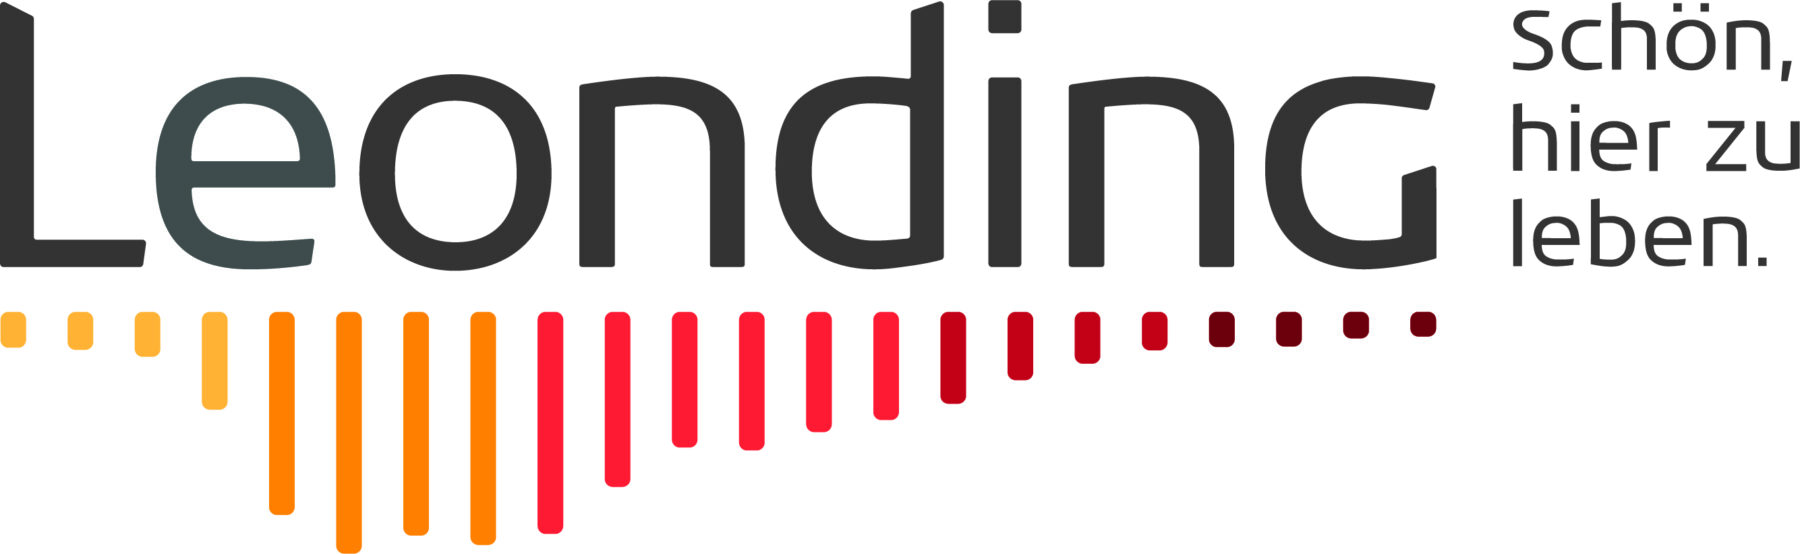 Leondinger_Logo_mit_Slogan